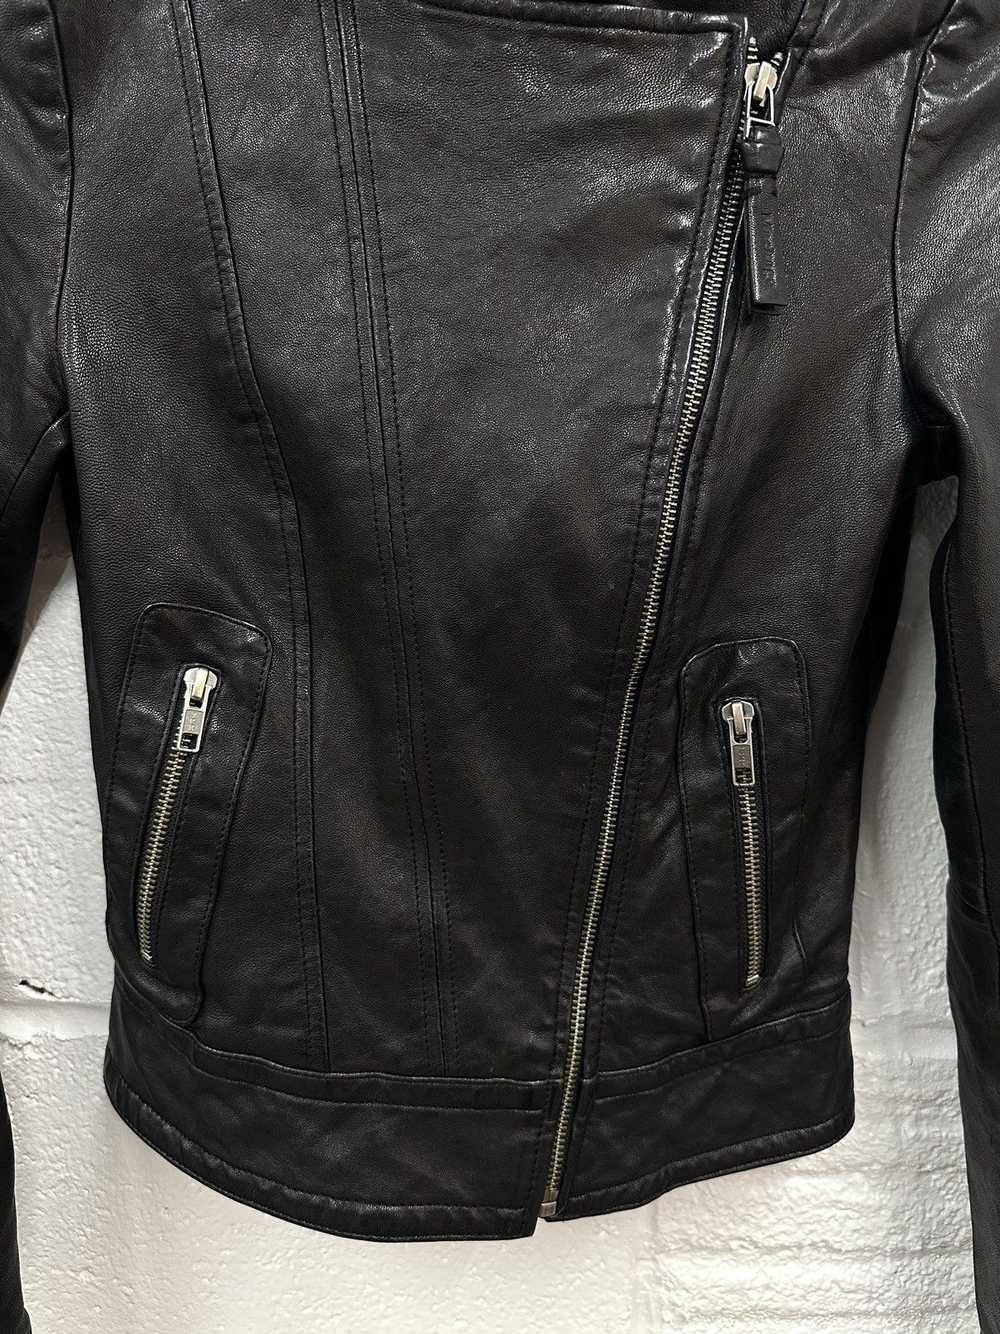 Mackage Mackage Leather Biker jacket - image 3